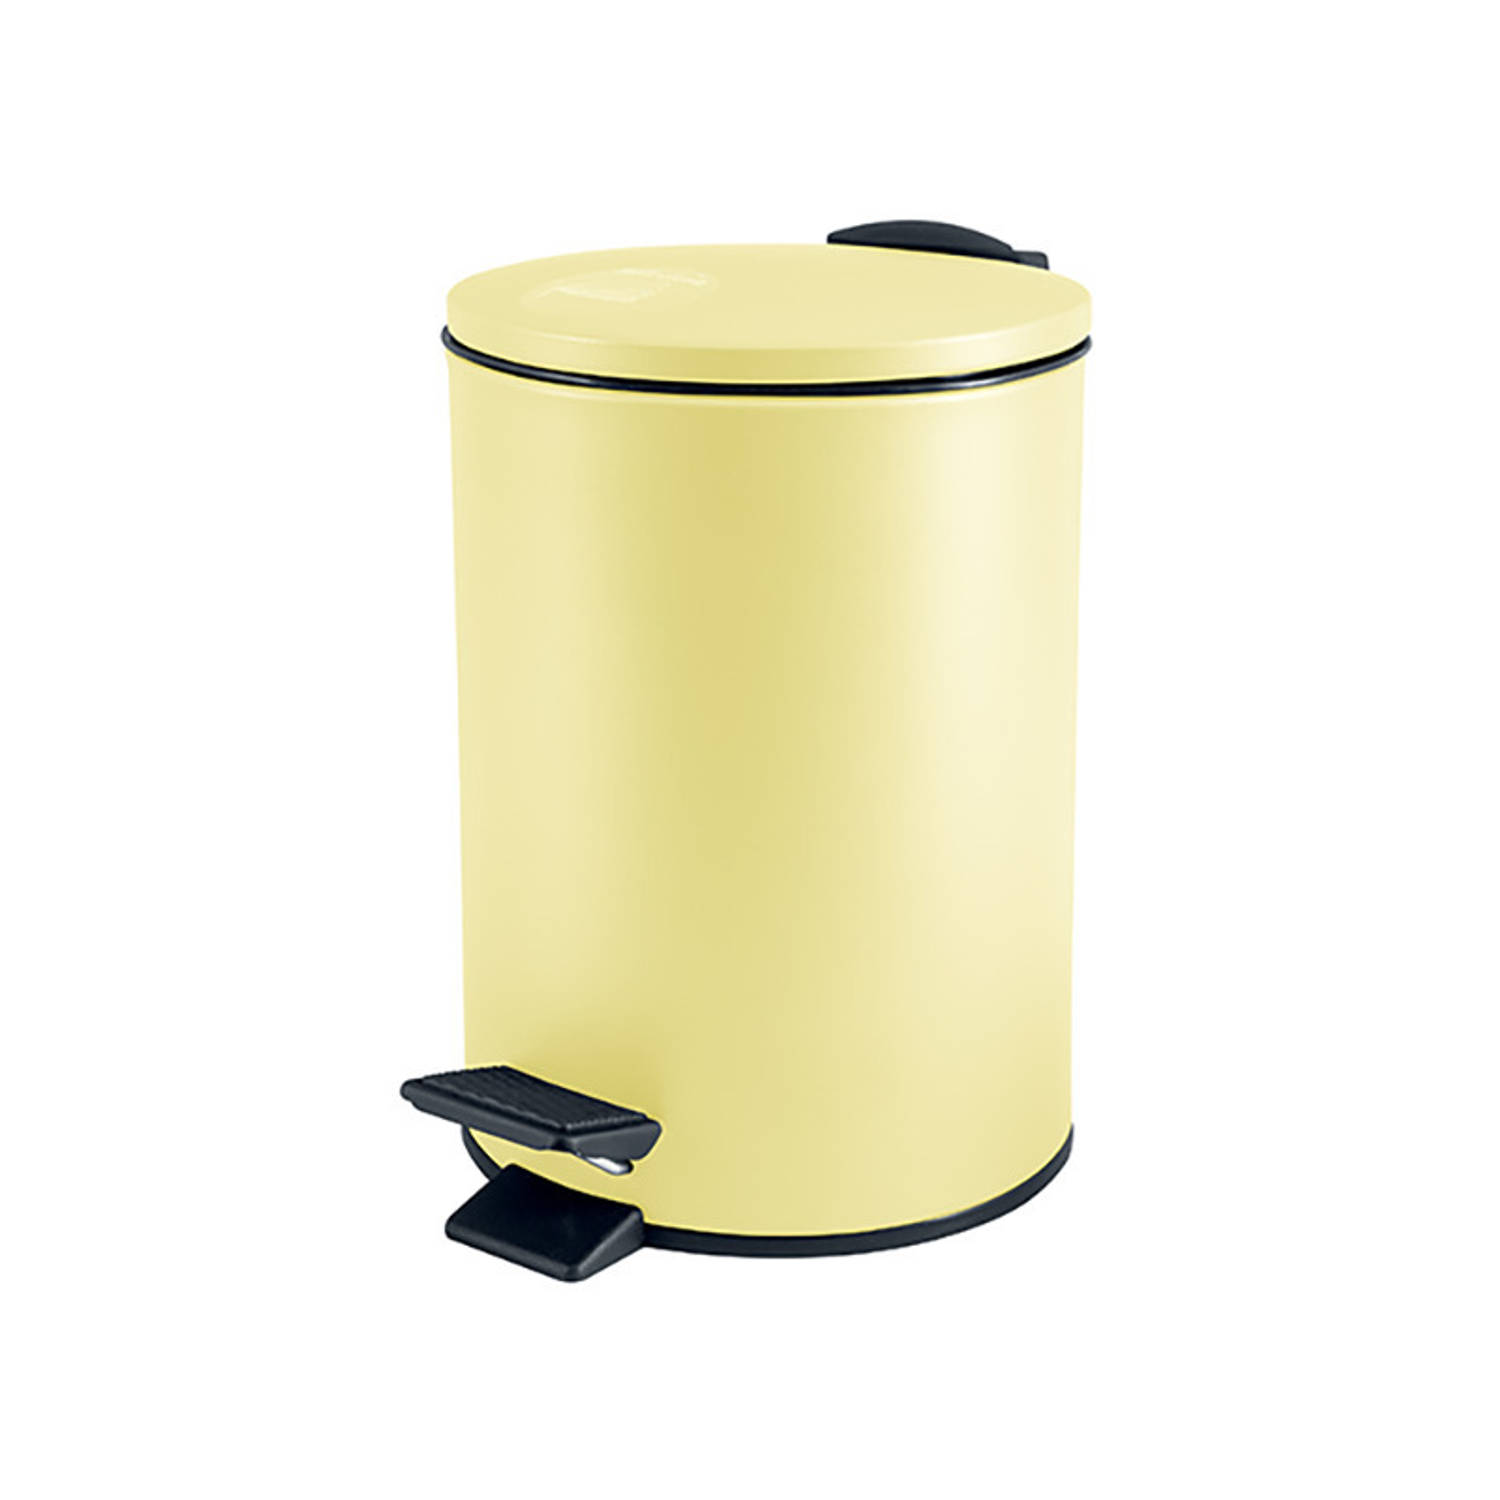 Spirella Pedaalemmer Cannes - geel - 5 liter - metaal - L20 x H27 cm - soft-close - toilet/badkamer